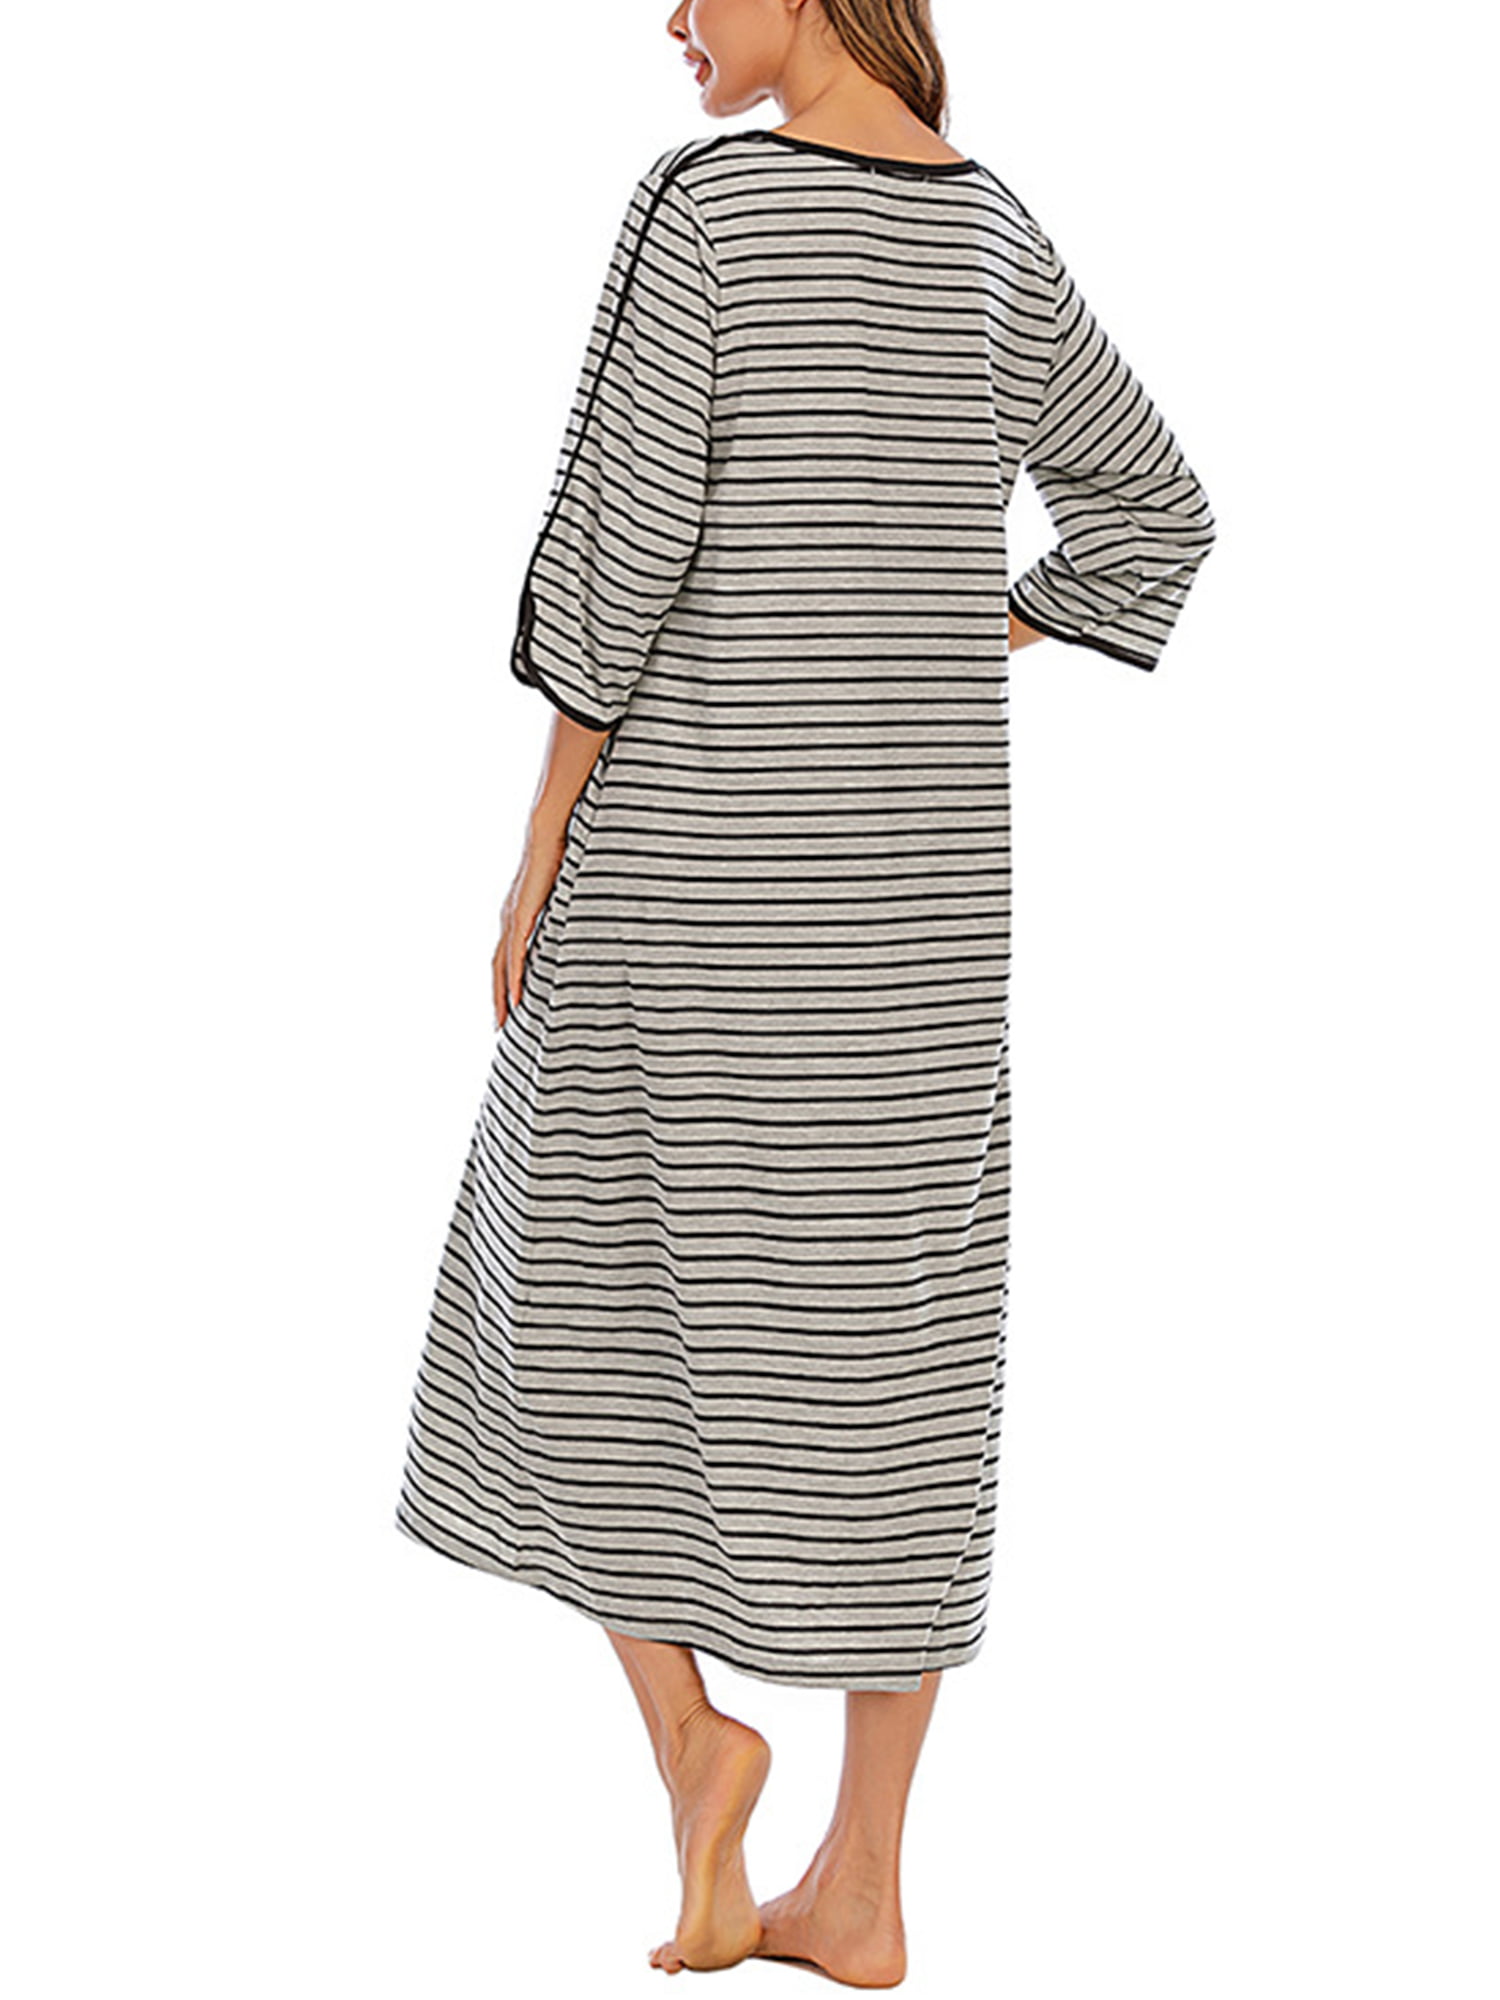 Women's Plus Size Nightgowns Striped Sleep Dress Short Sleeve Half